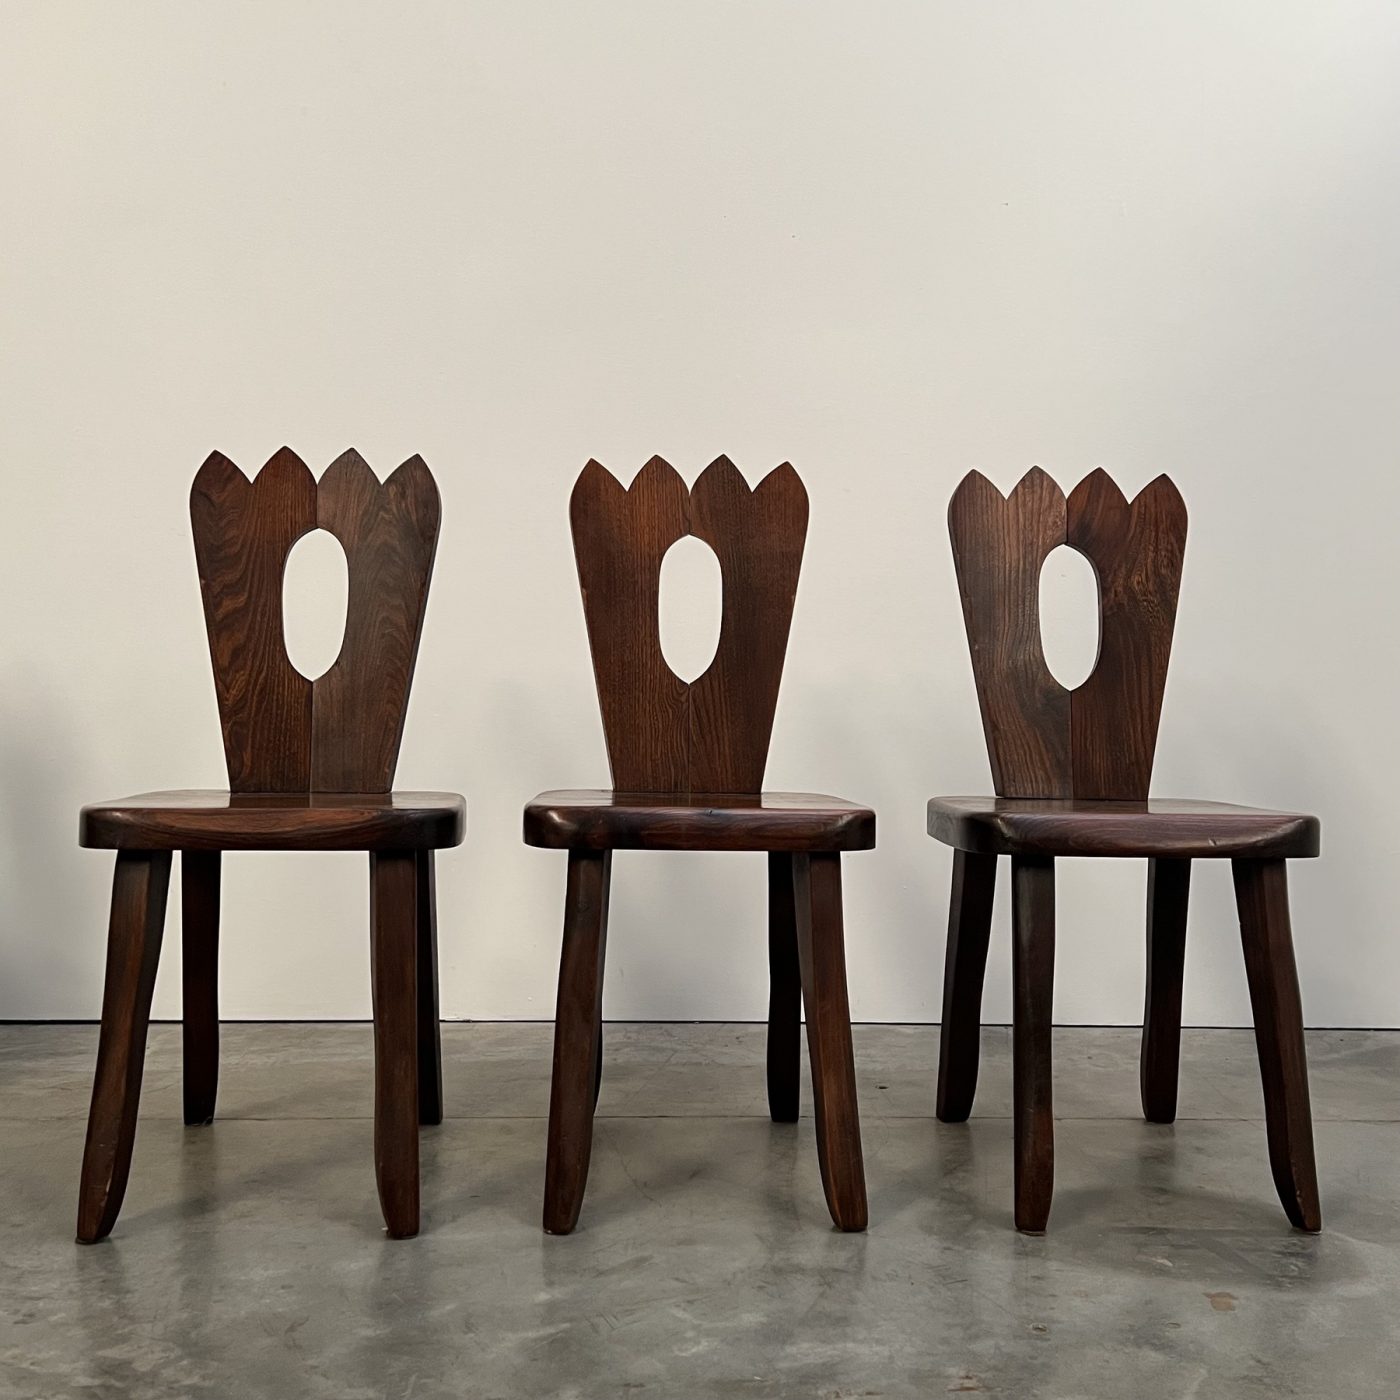 objet-vagabond-brutalist-chairs0001